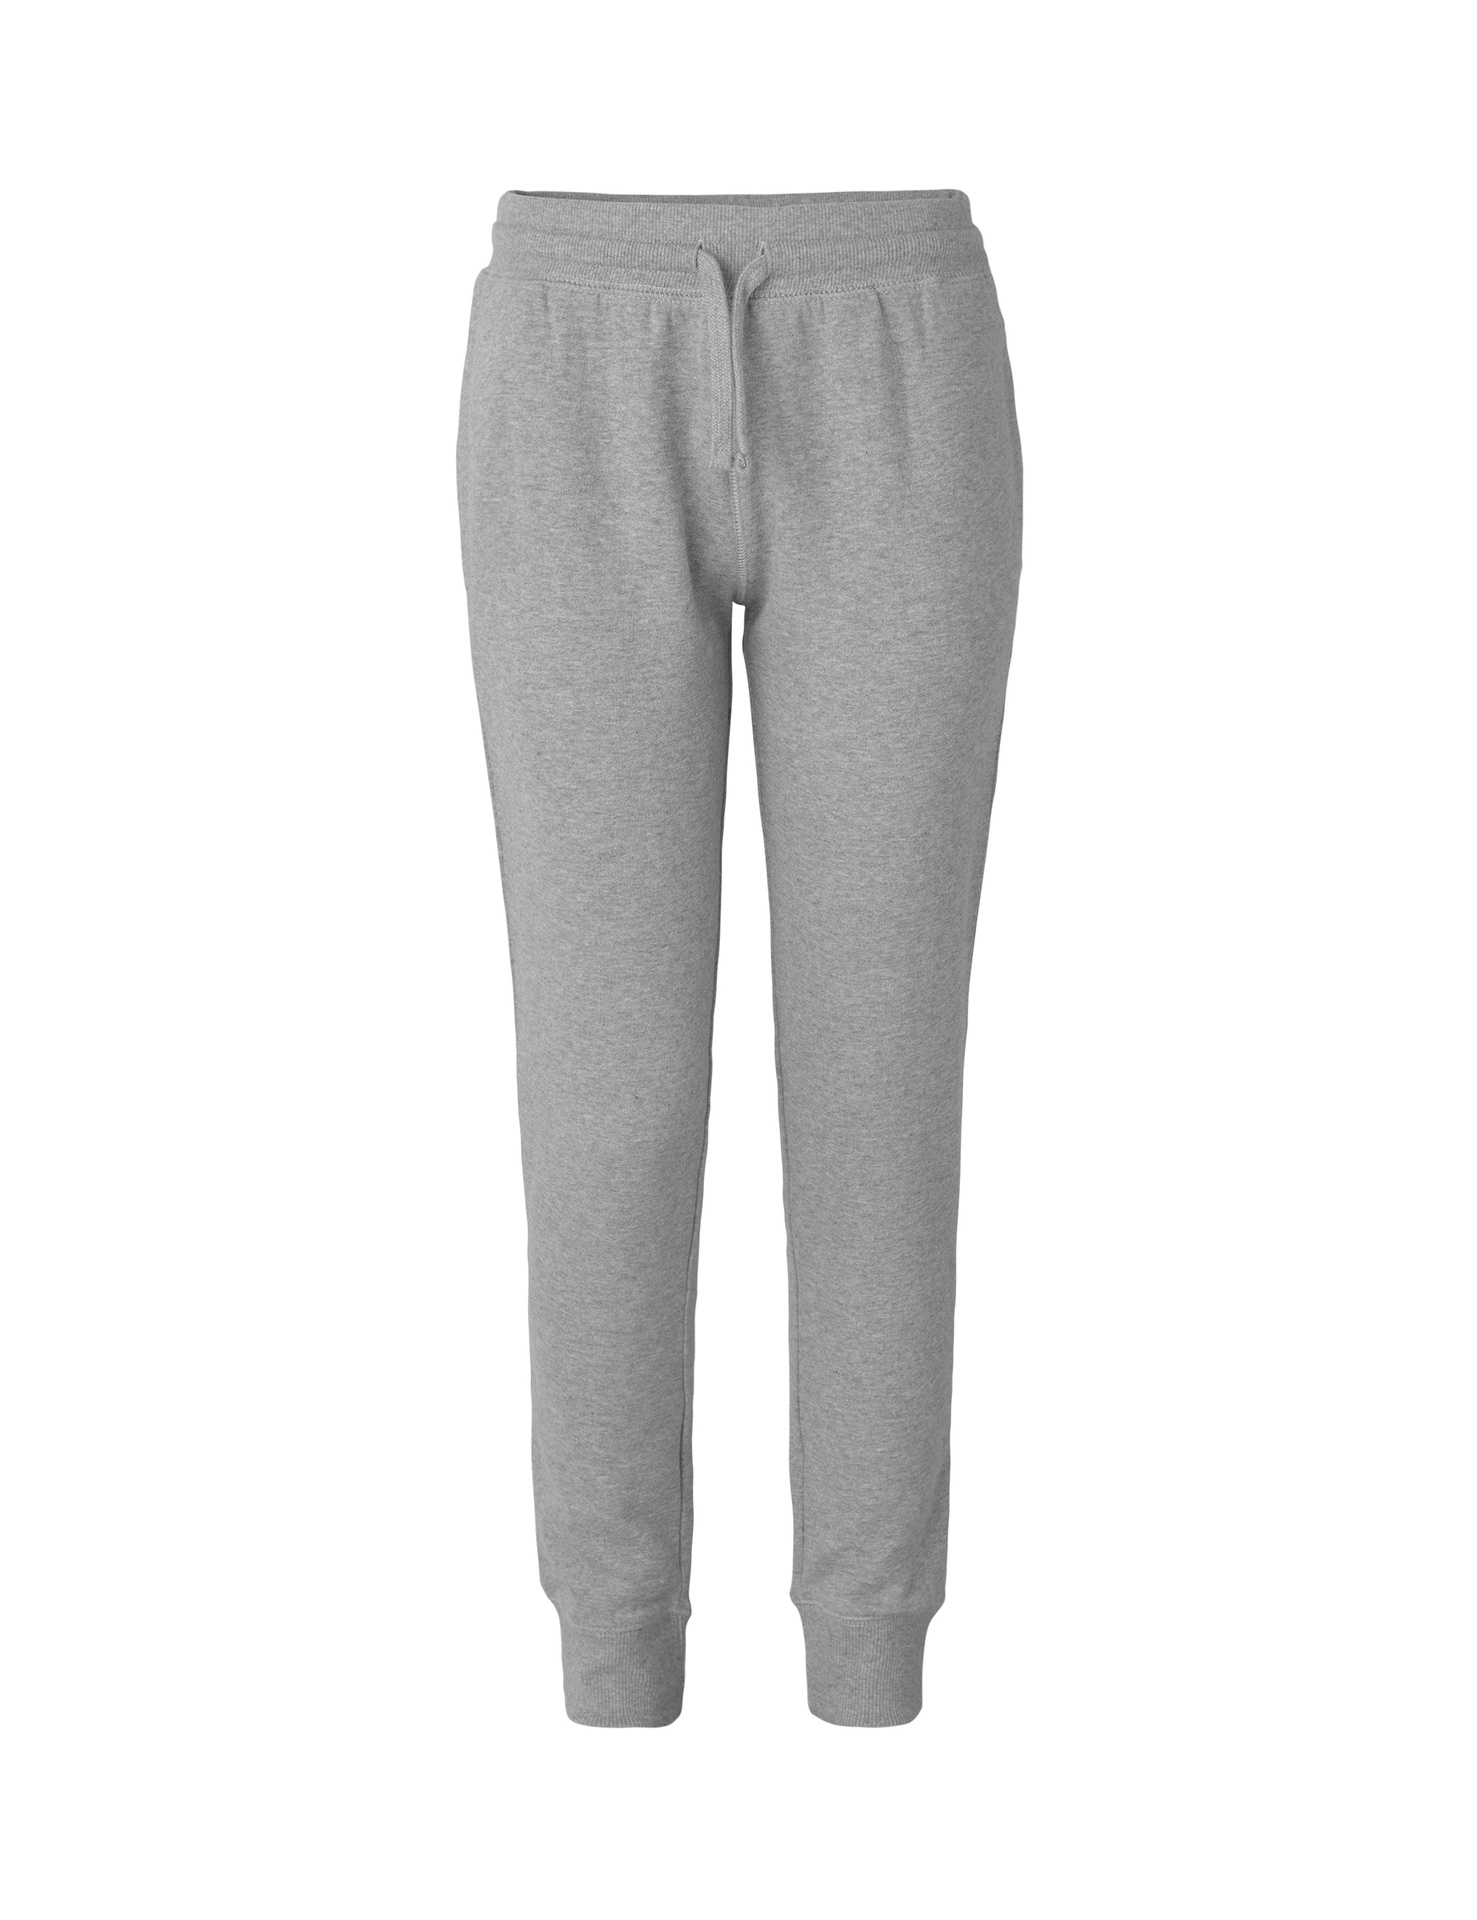 [PR/05572] Kids Sweatpants (Sport Grey 21, 116/122 cm)